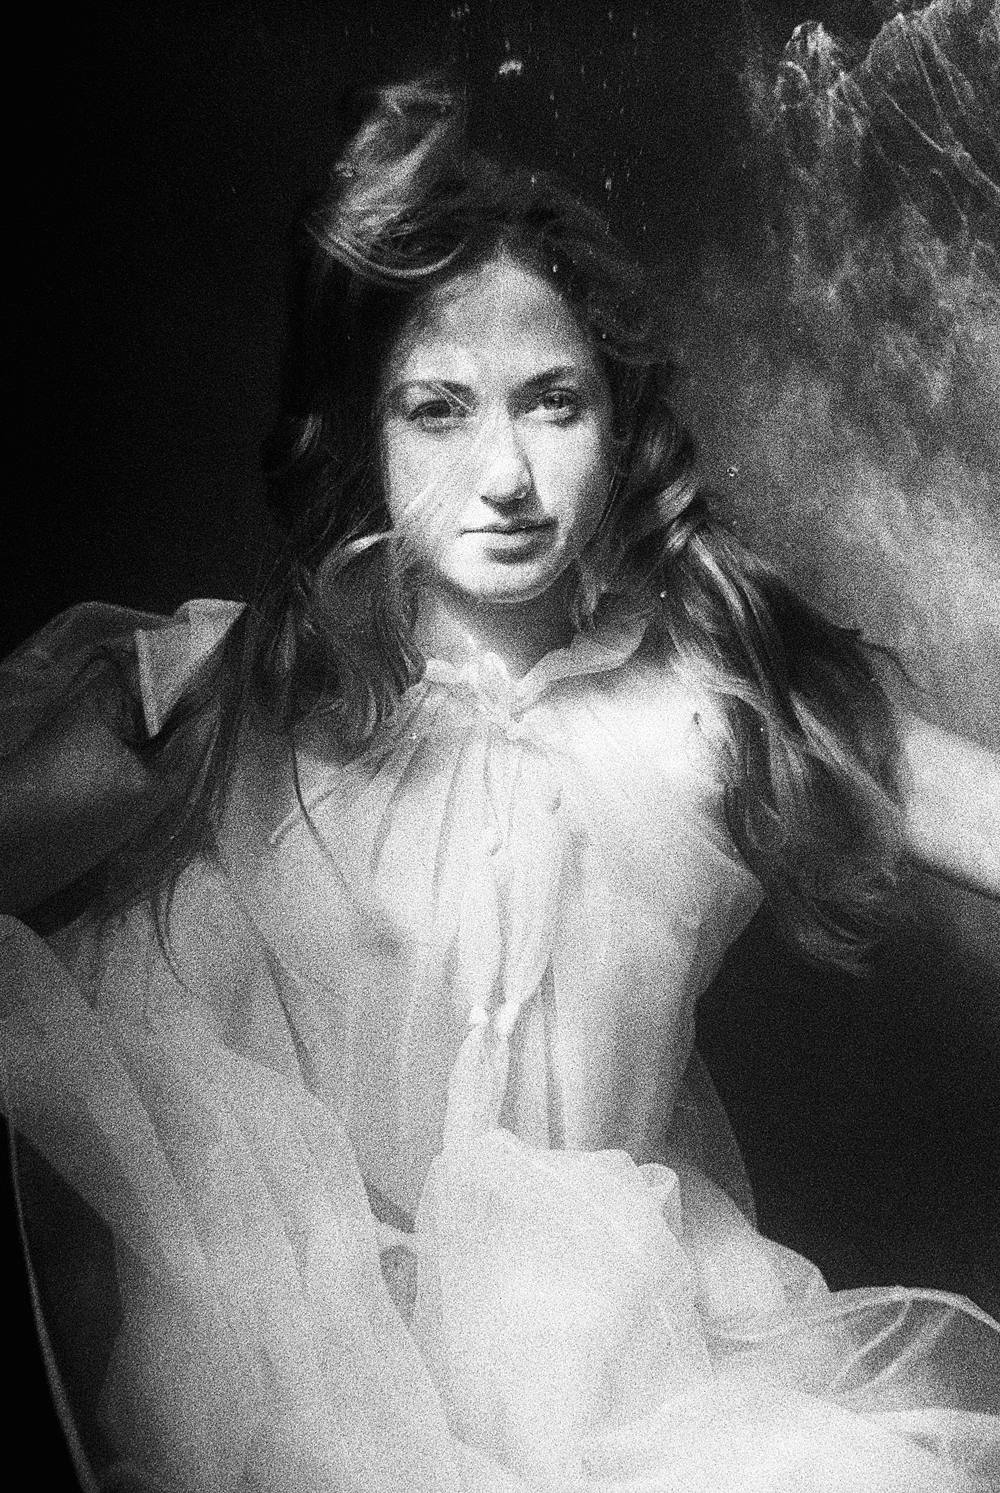 Nikonos v underwater portrait on kodak p3200 film with girl in sheer dress black and white staring at camera